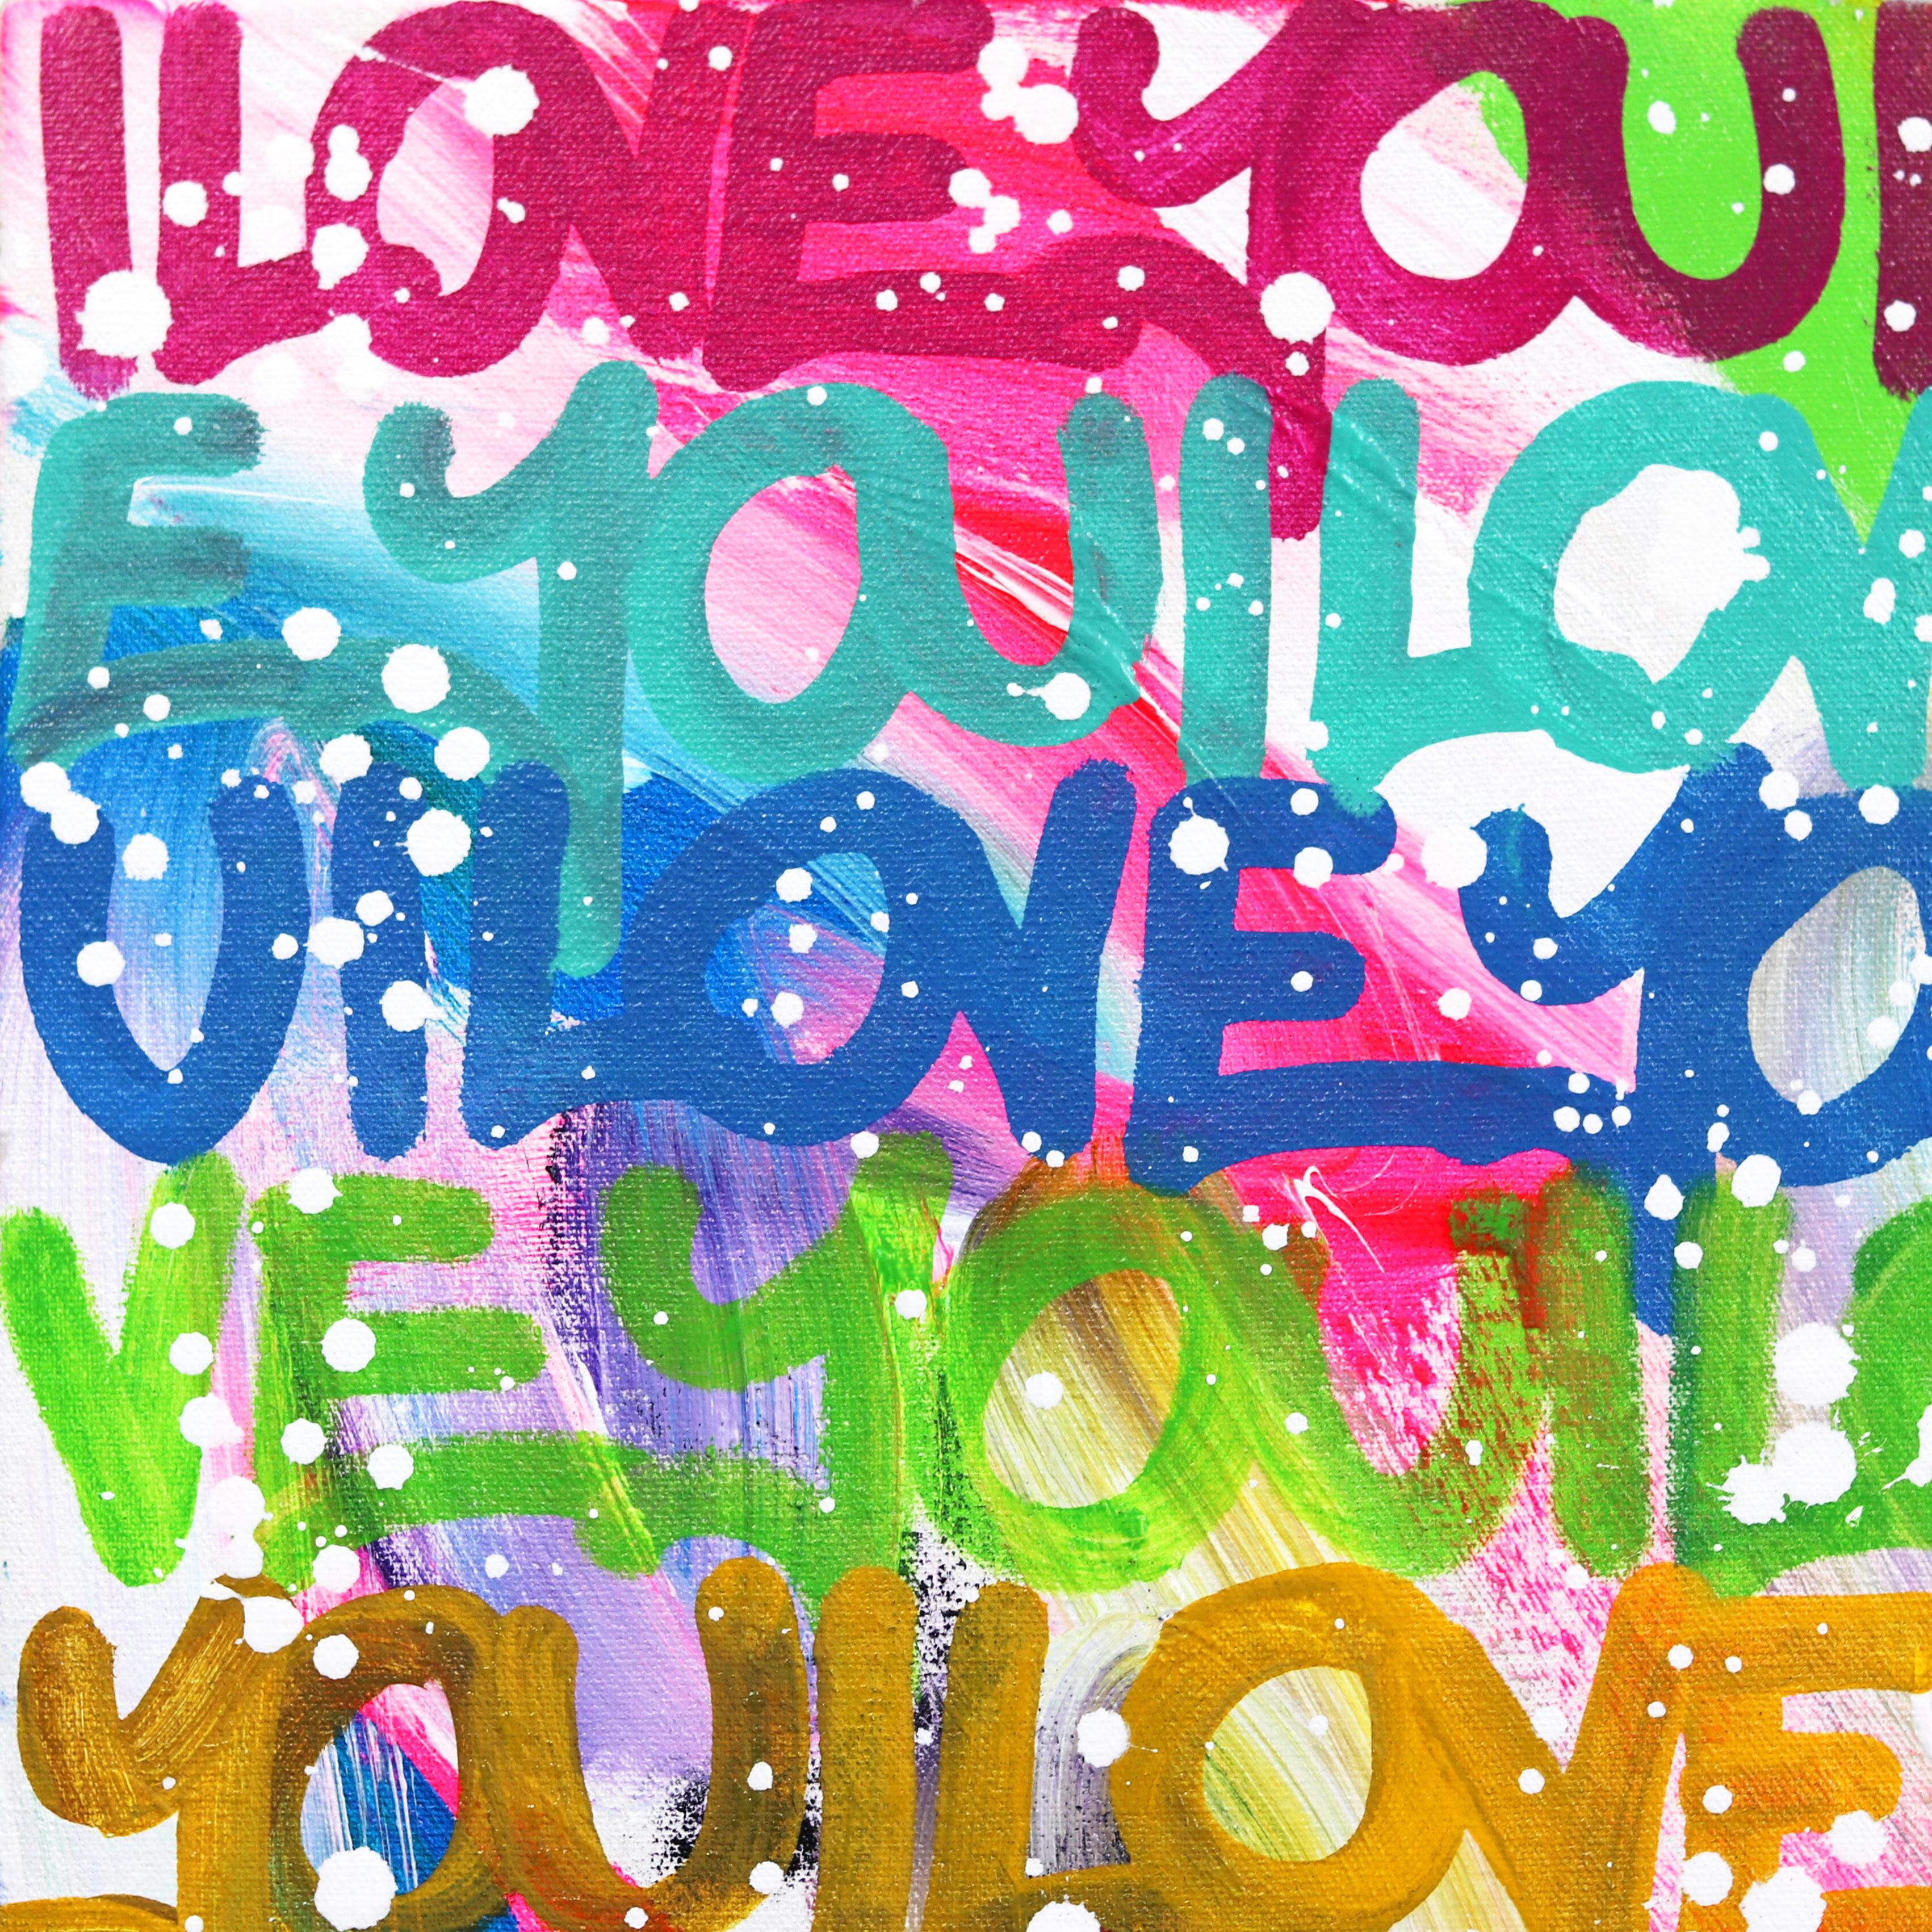 Show Your Colorful Original Love Graffiti peinture sur toile - Art urbain Painting par Amber Goldhammer